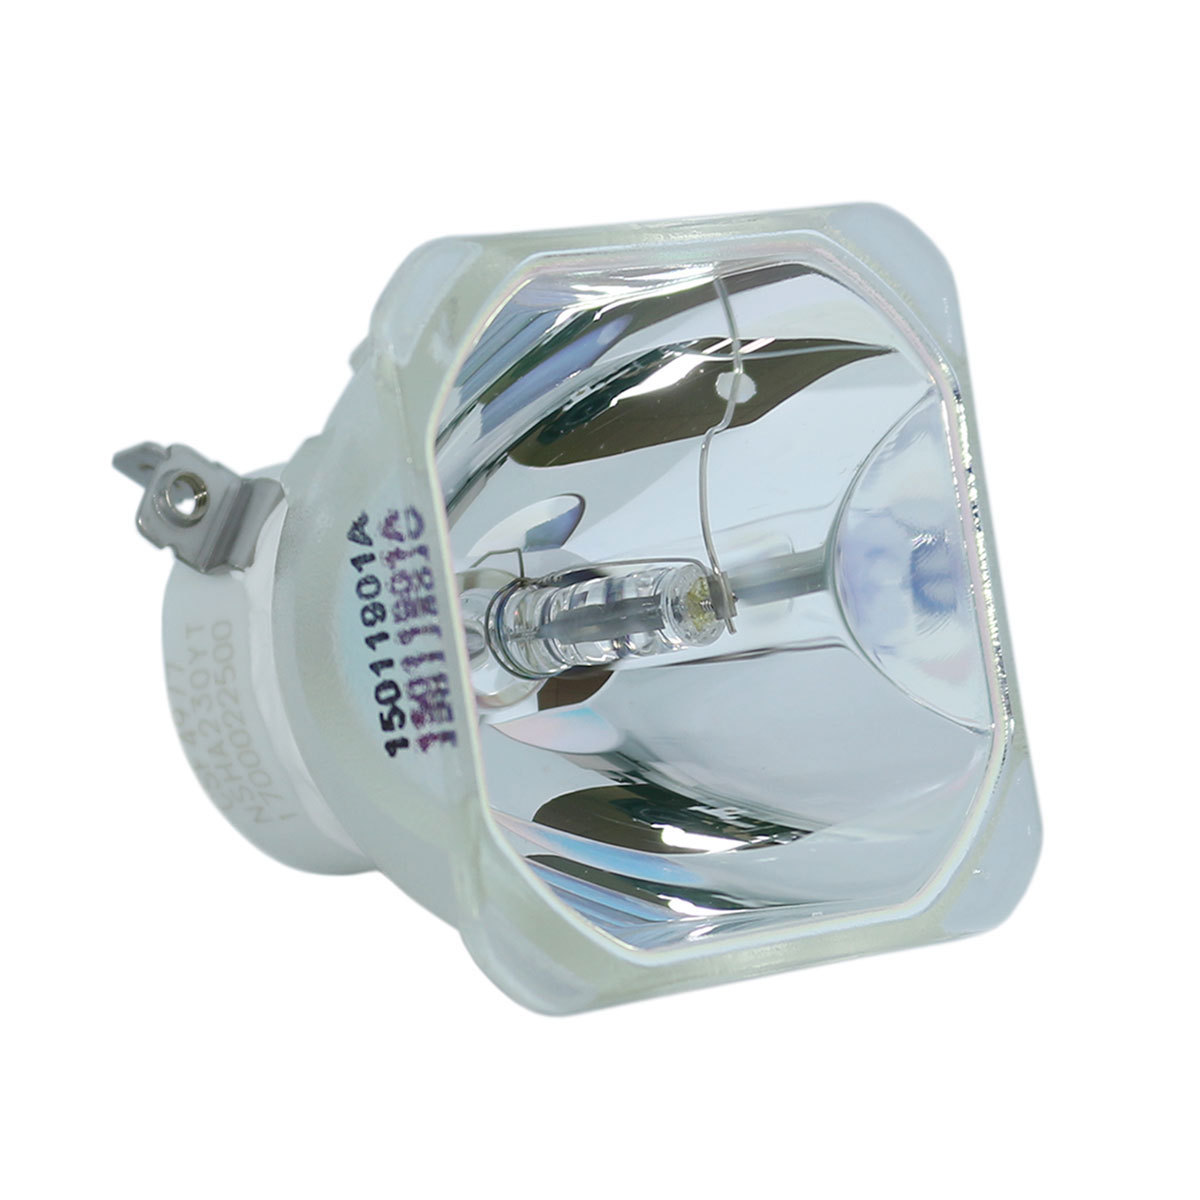 LG AJ-LBD4 Ushio Projector Bare Lamp - $82.50